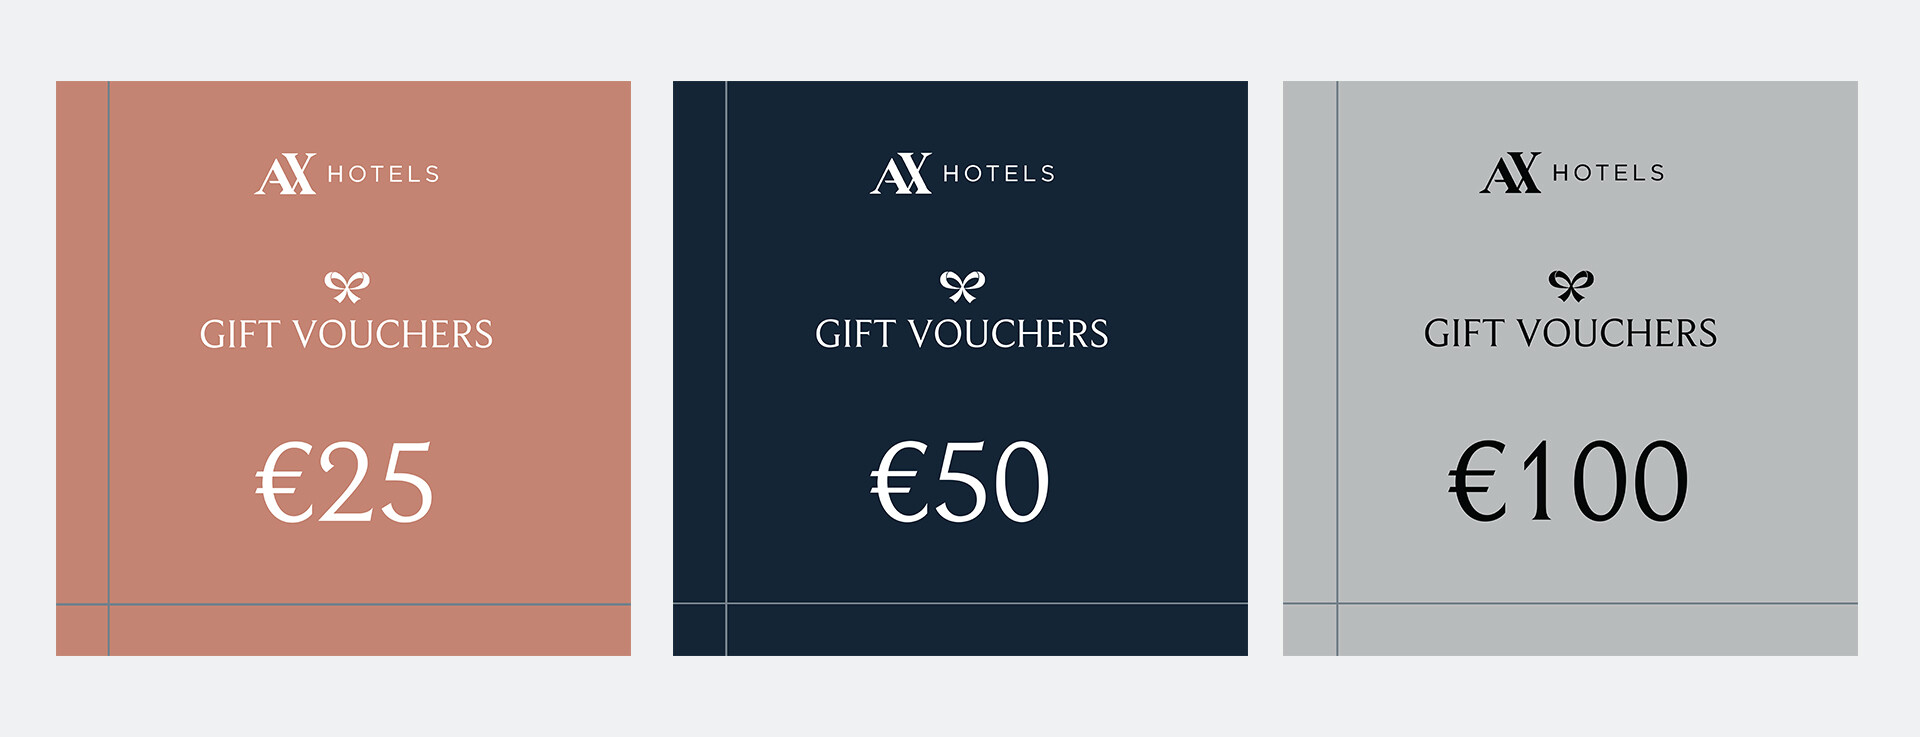 Monetary Gift Vouchers Malta - AX Hotels